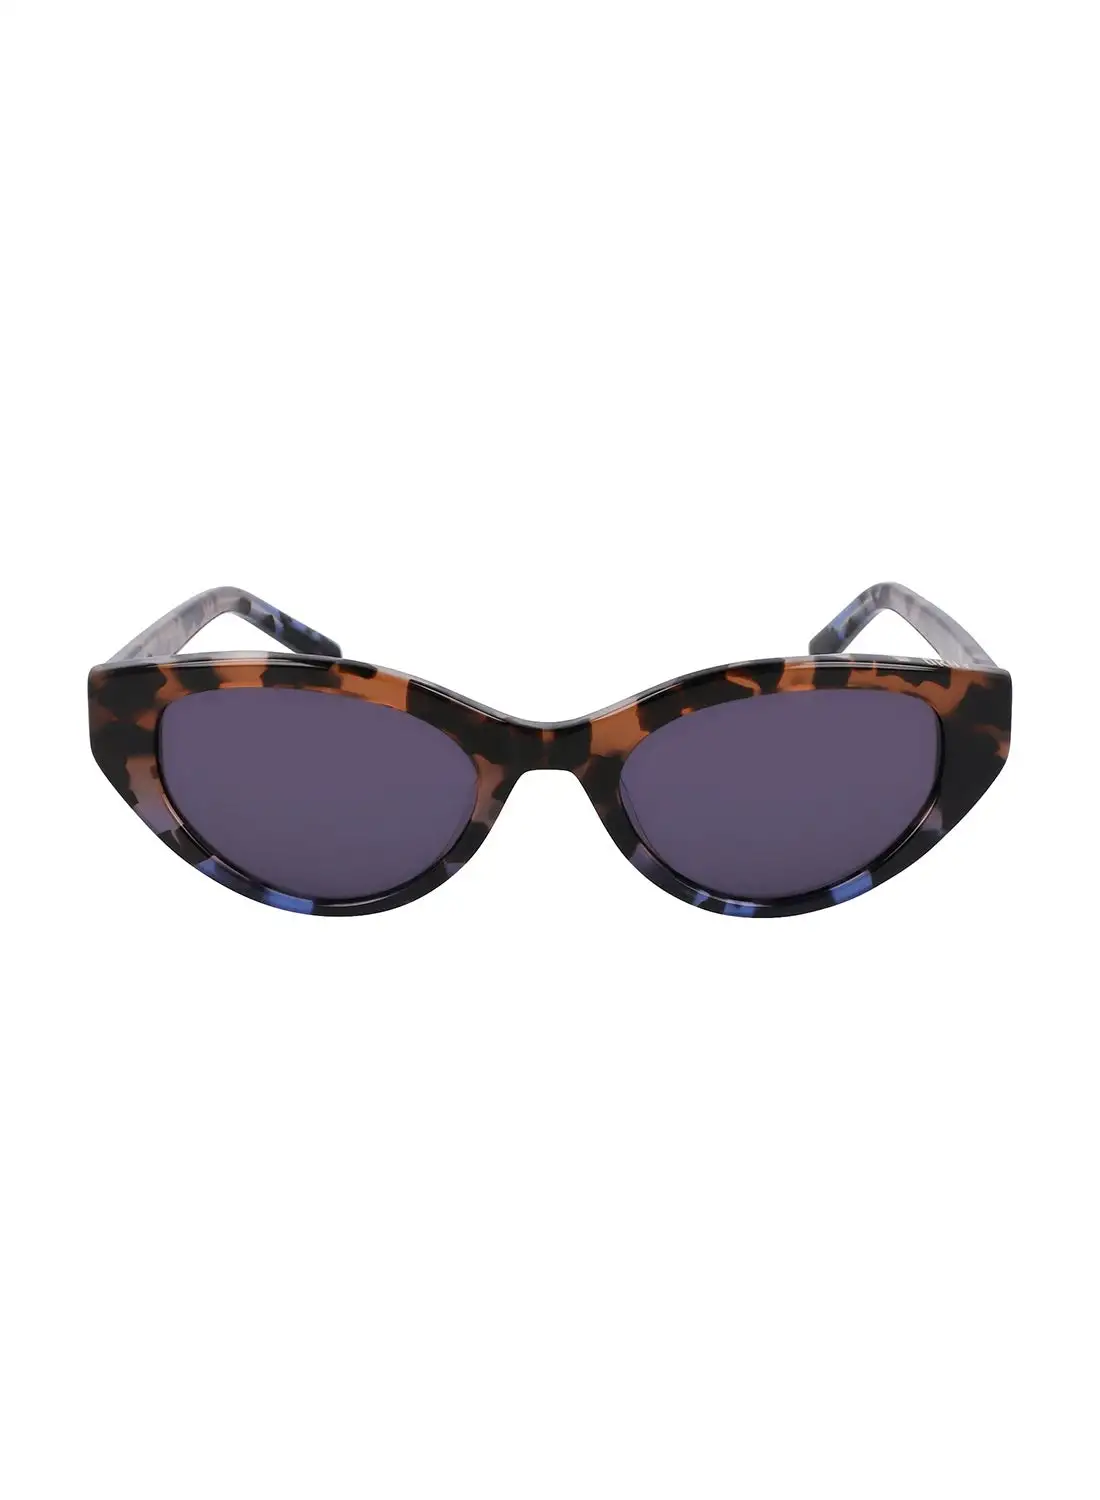 DKNY Women's Oval Sunglasses - Blue - Lens Size: 51 Mm